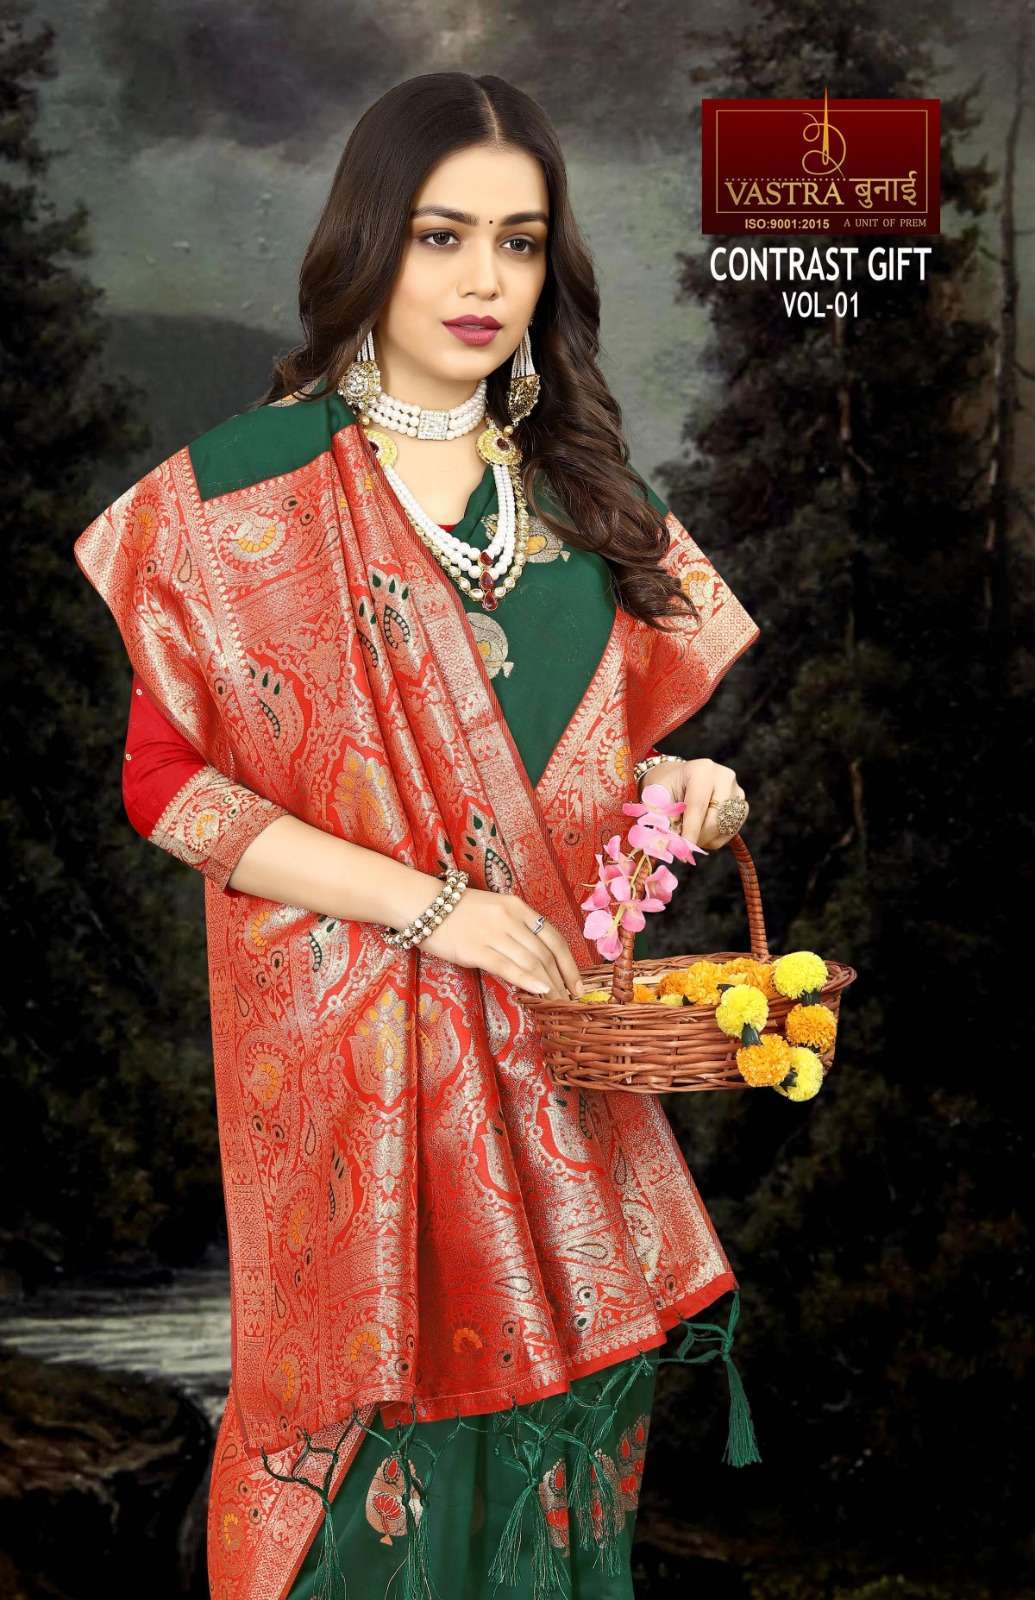 Vasthra Saree Draping - Silk sarees are the most elegant of sarees